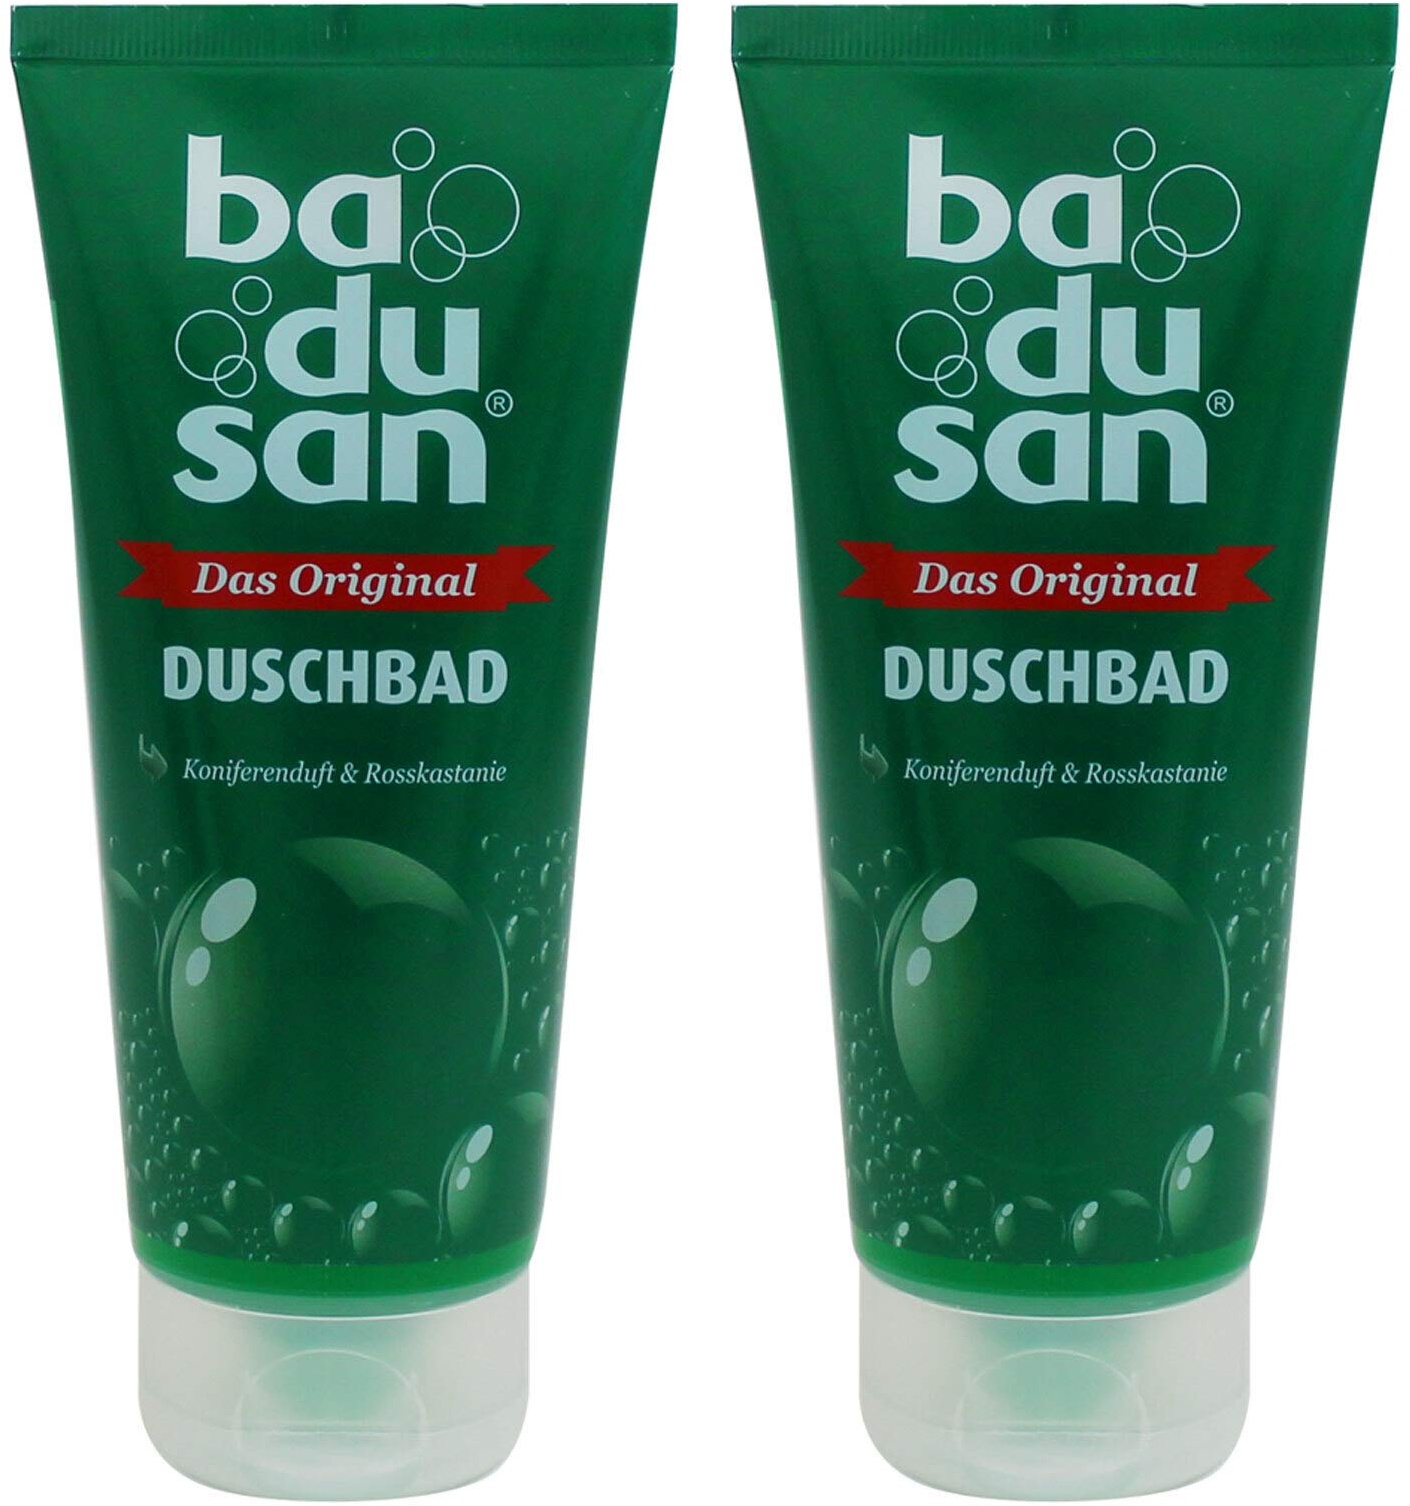 2er Pack Badusan Duschgel Duschbad Das Original 2 x 200 ml Tube